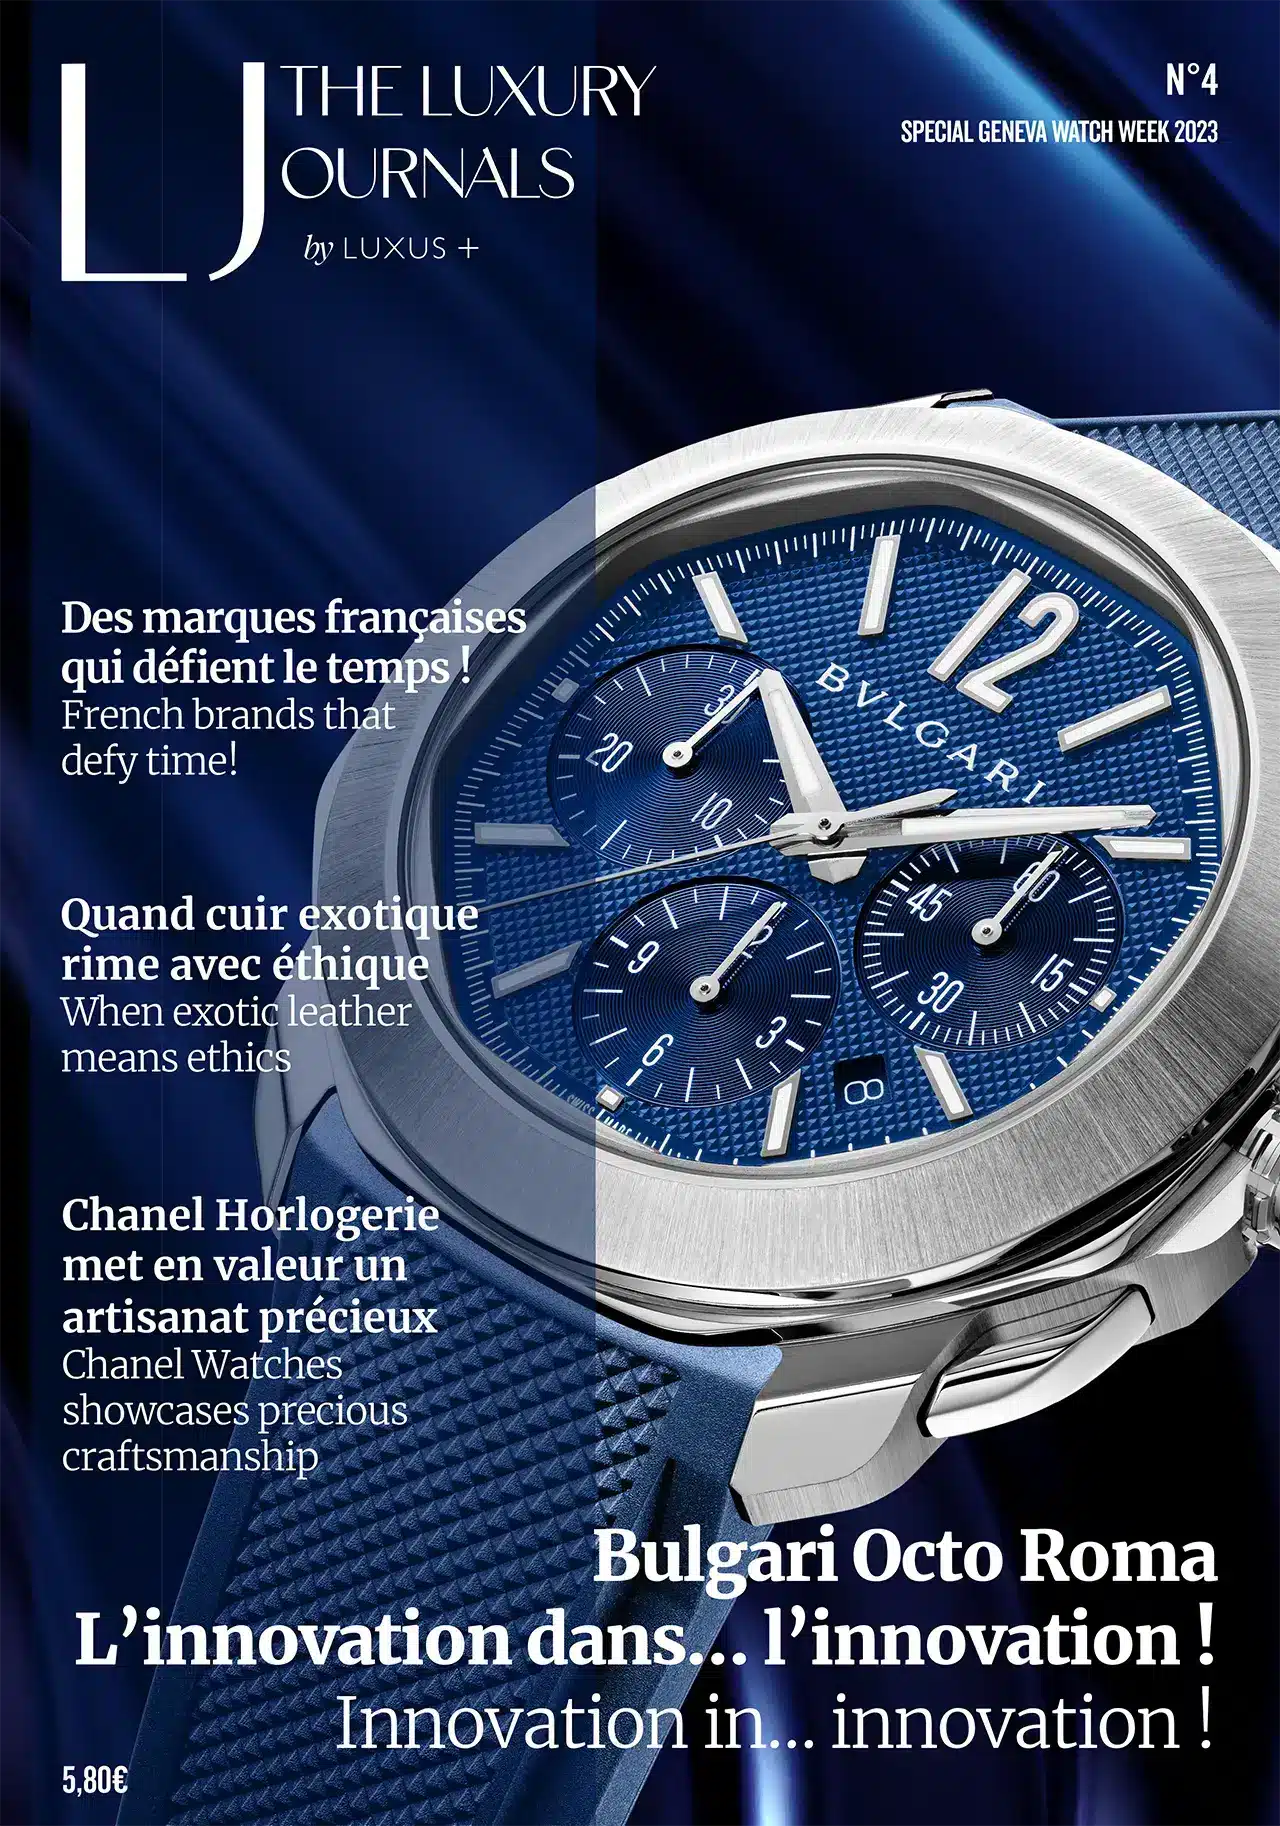 The Luxury Journals by Luxus+ - Spécial Geneva Watch Week 2023